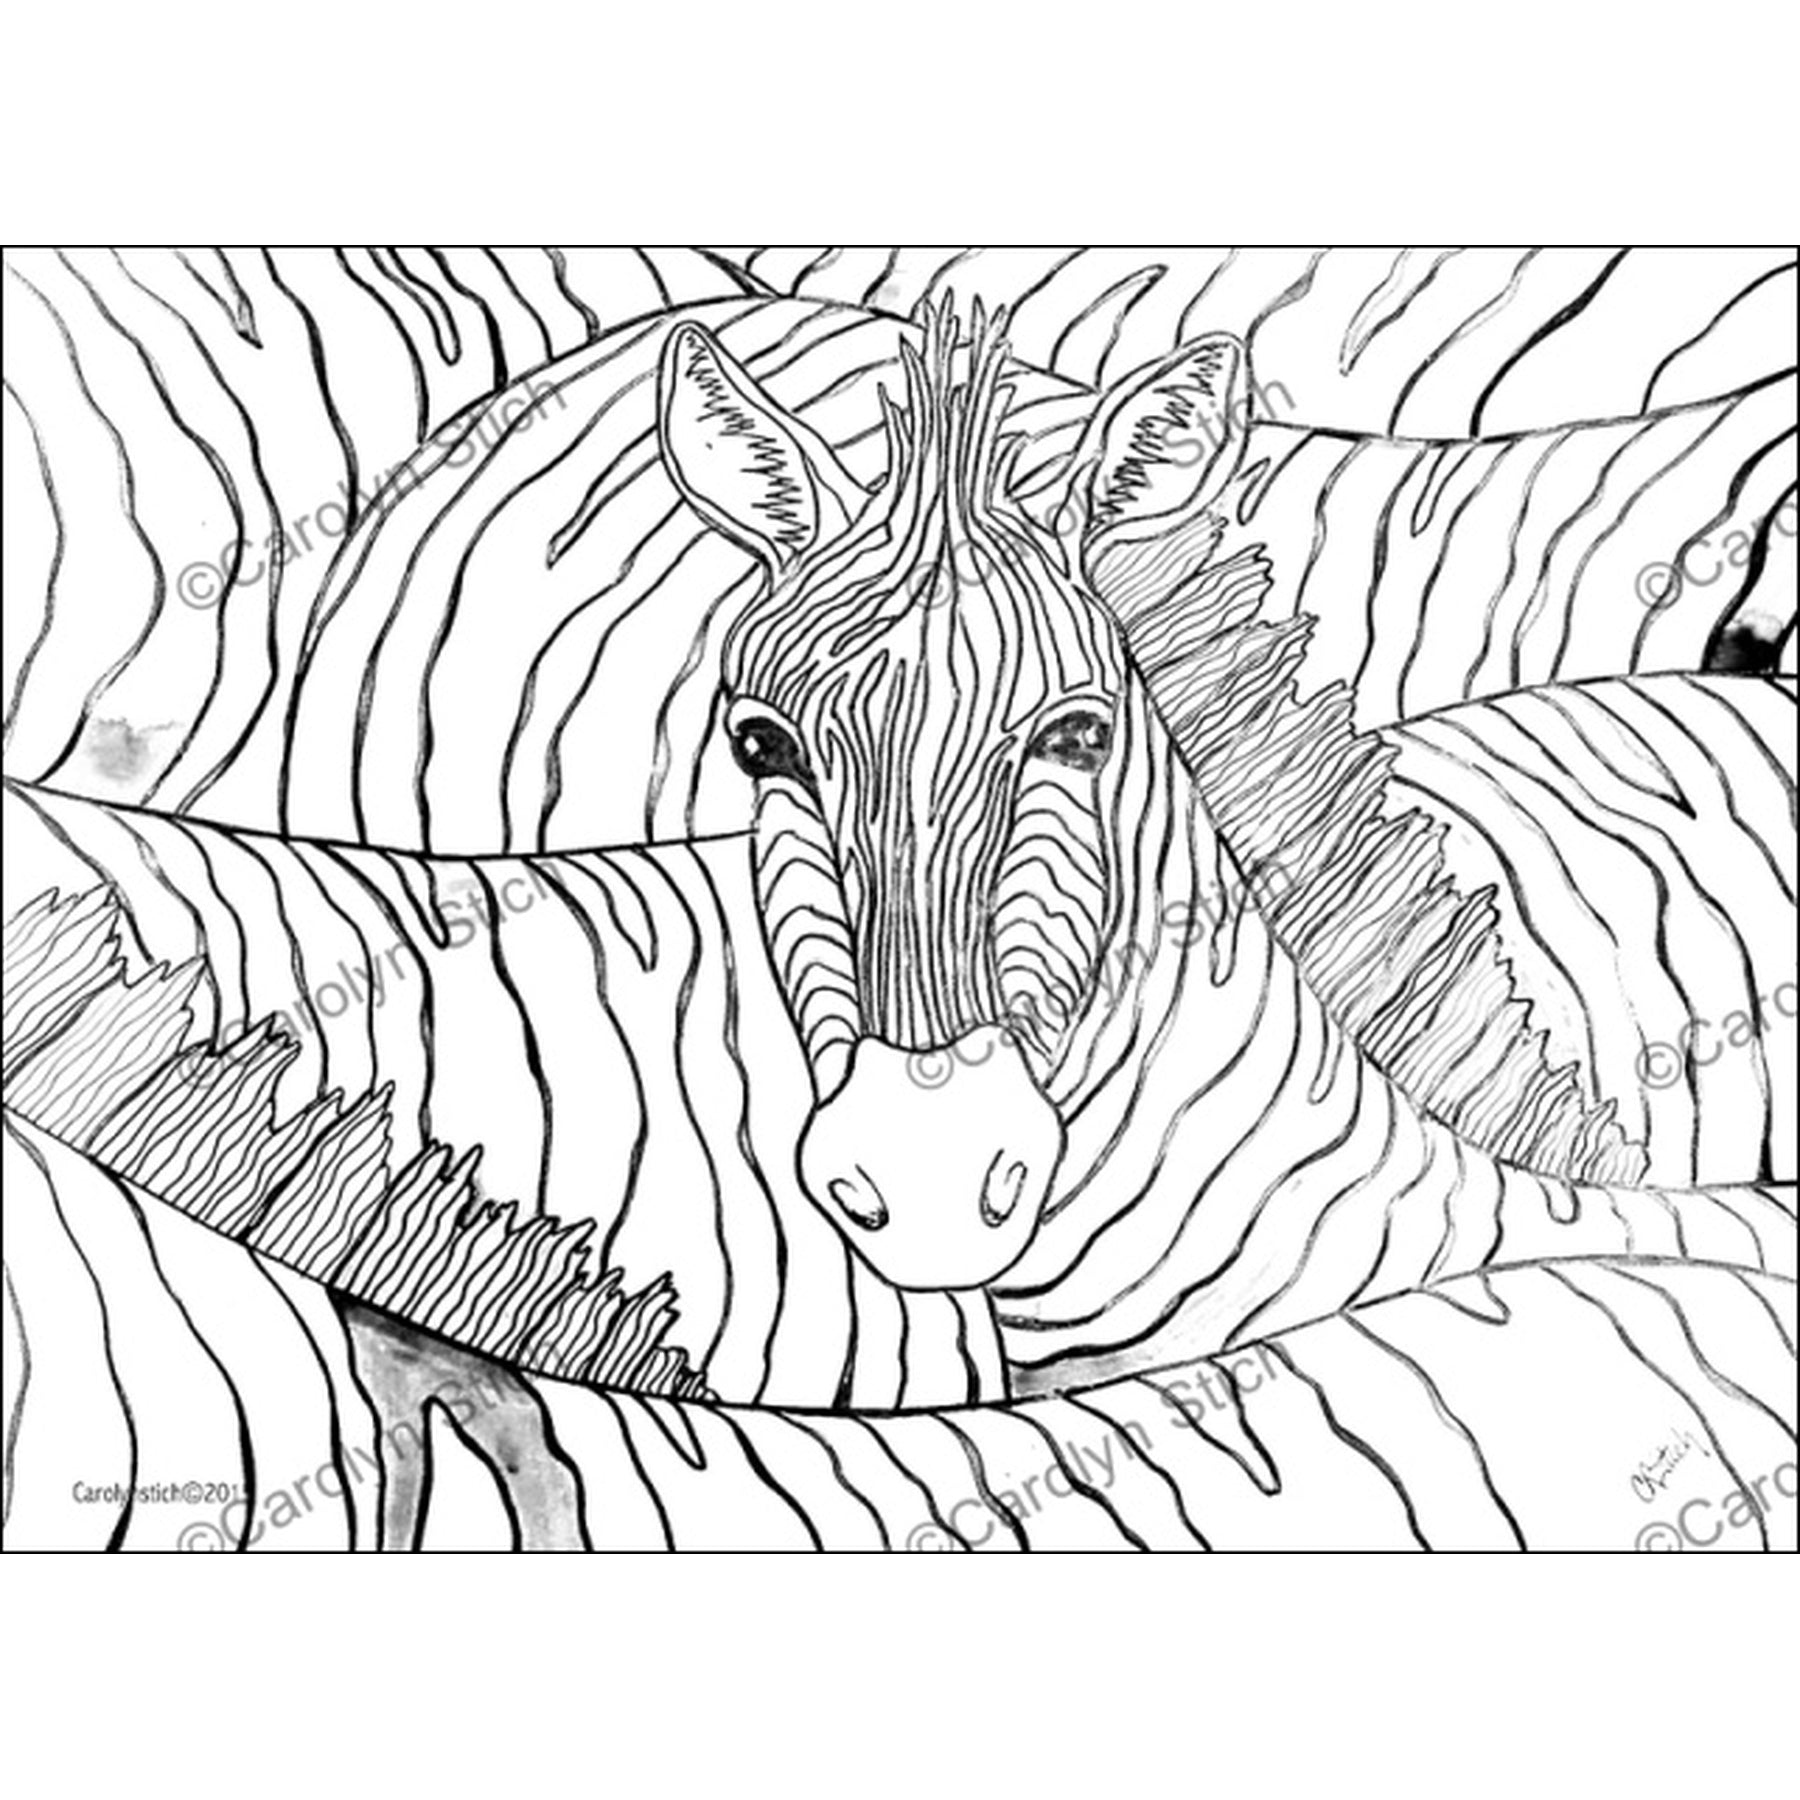 Zebra, rug hooking pattern